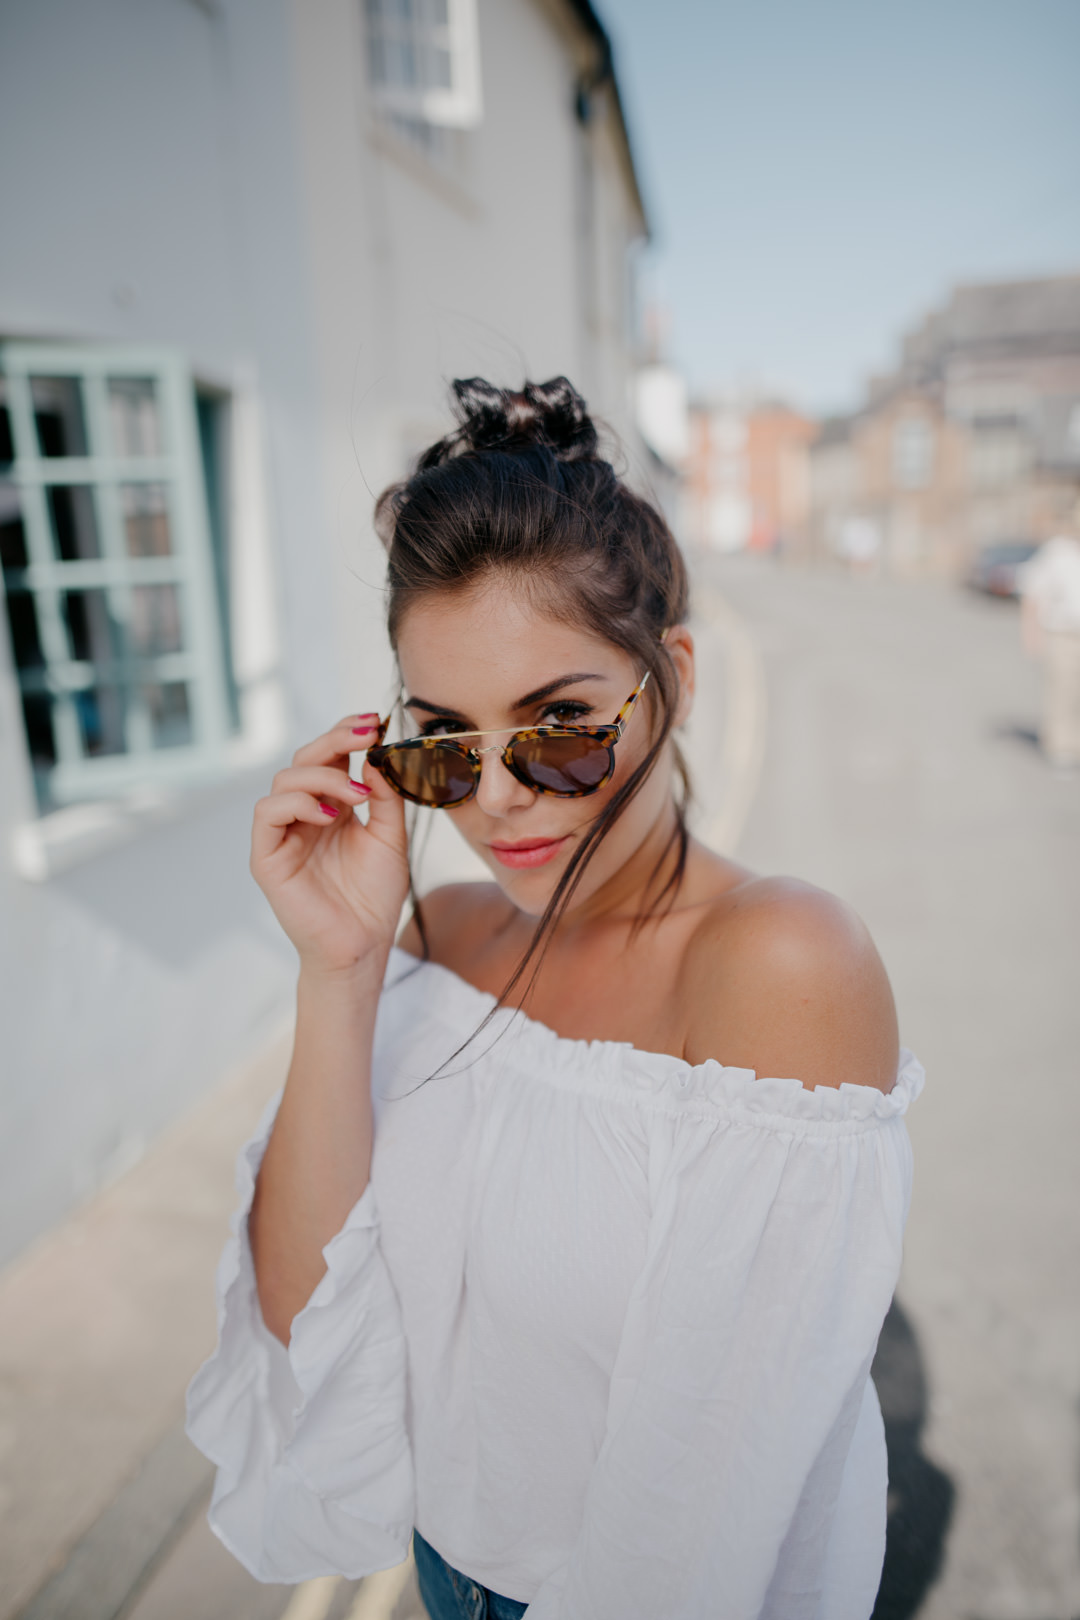 girl waring sun glasses in urban street smiling